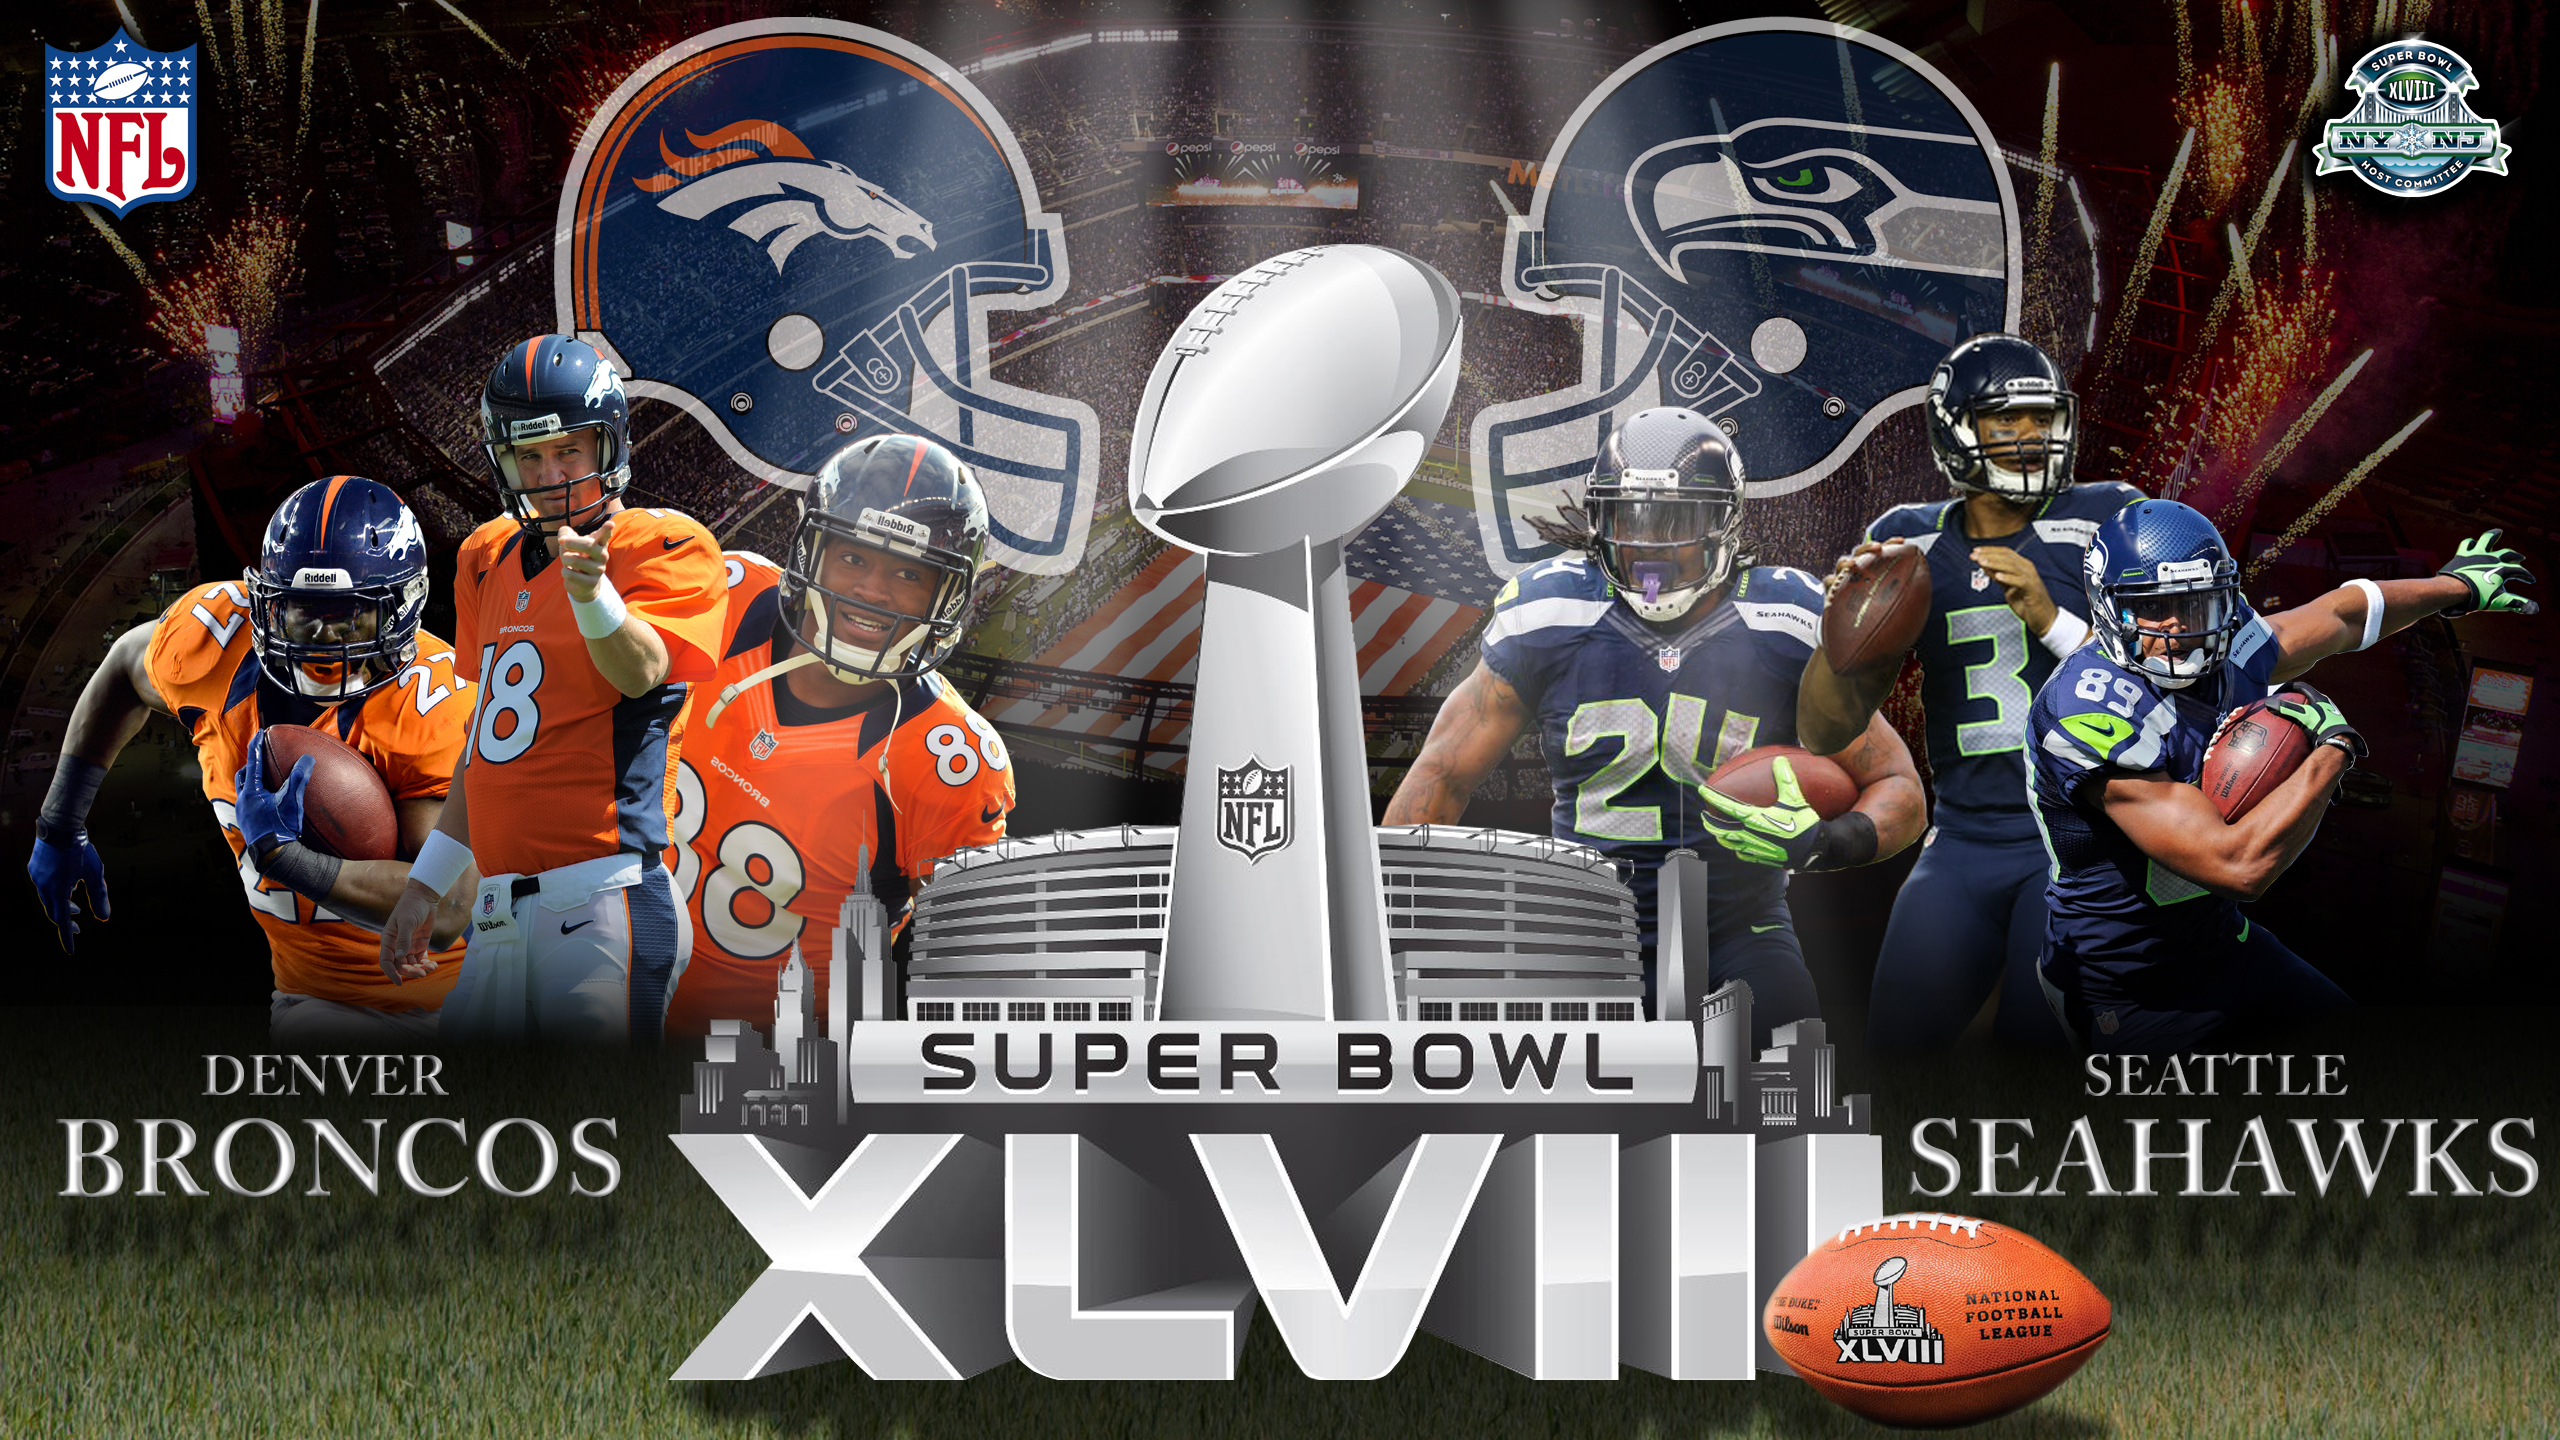 Super Bowl XLVIII Broncos Vs Seahawks by BeAware8